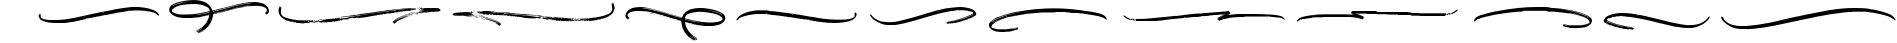 Hinterlands Signature Brush Font Font UPPERCASE